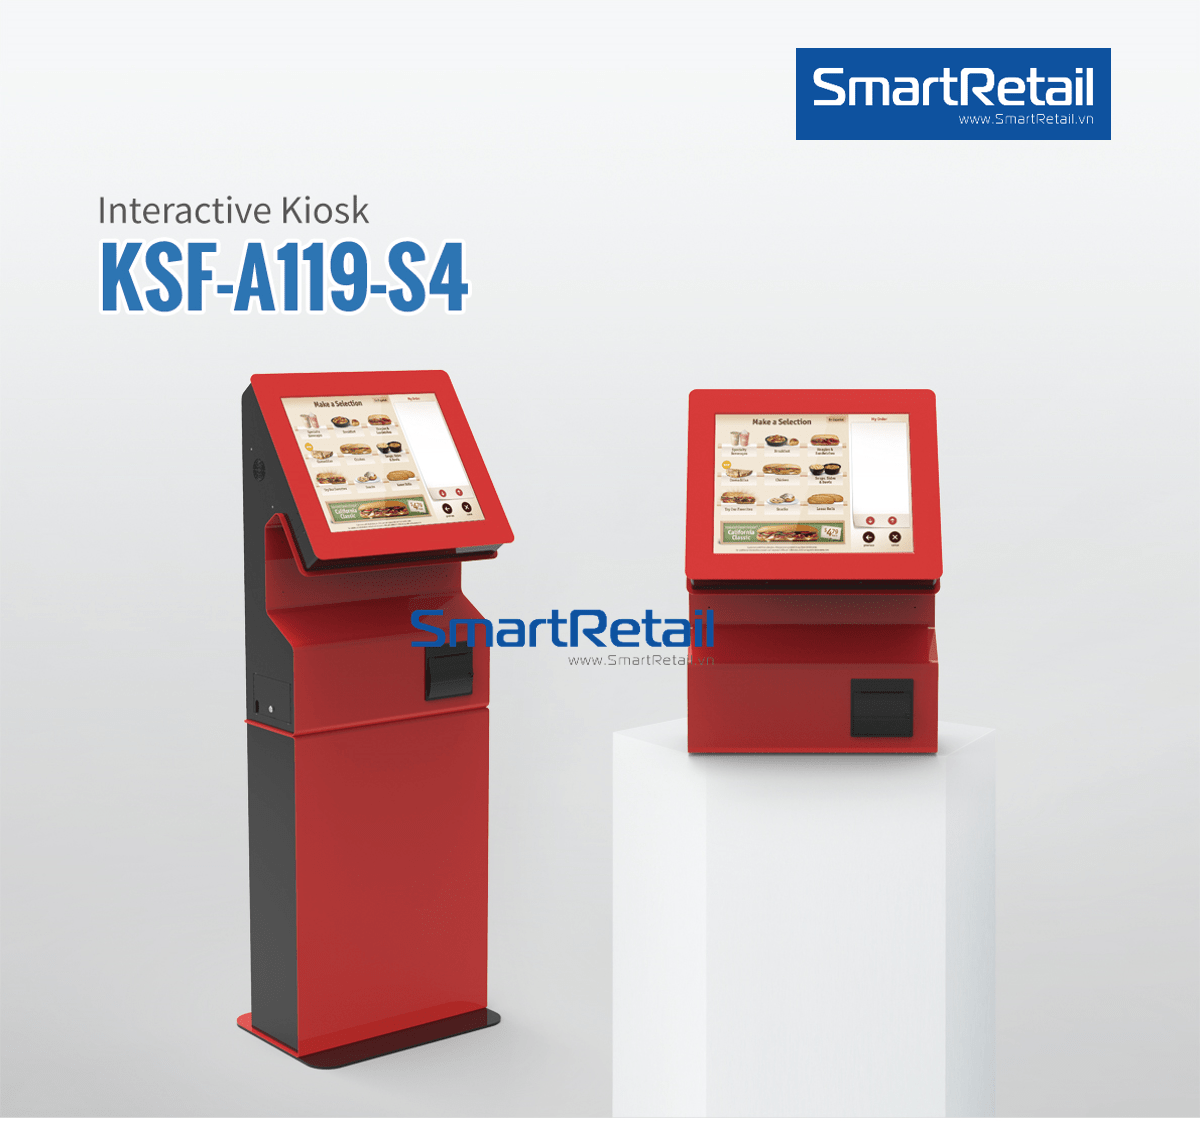 SmartRetail Kiosk Order KSF A119 S4 4